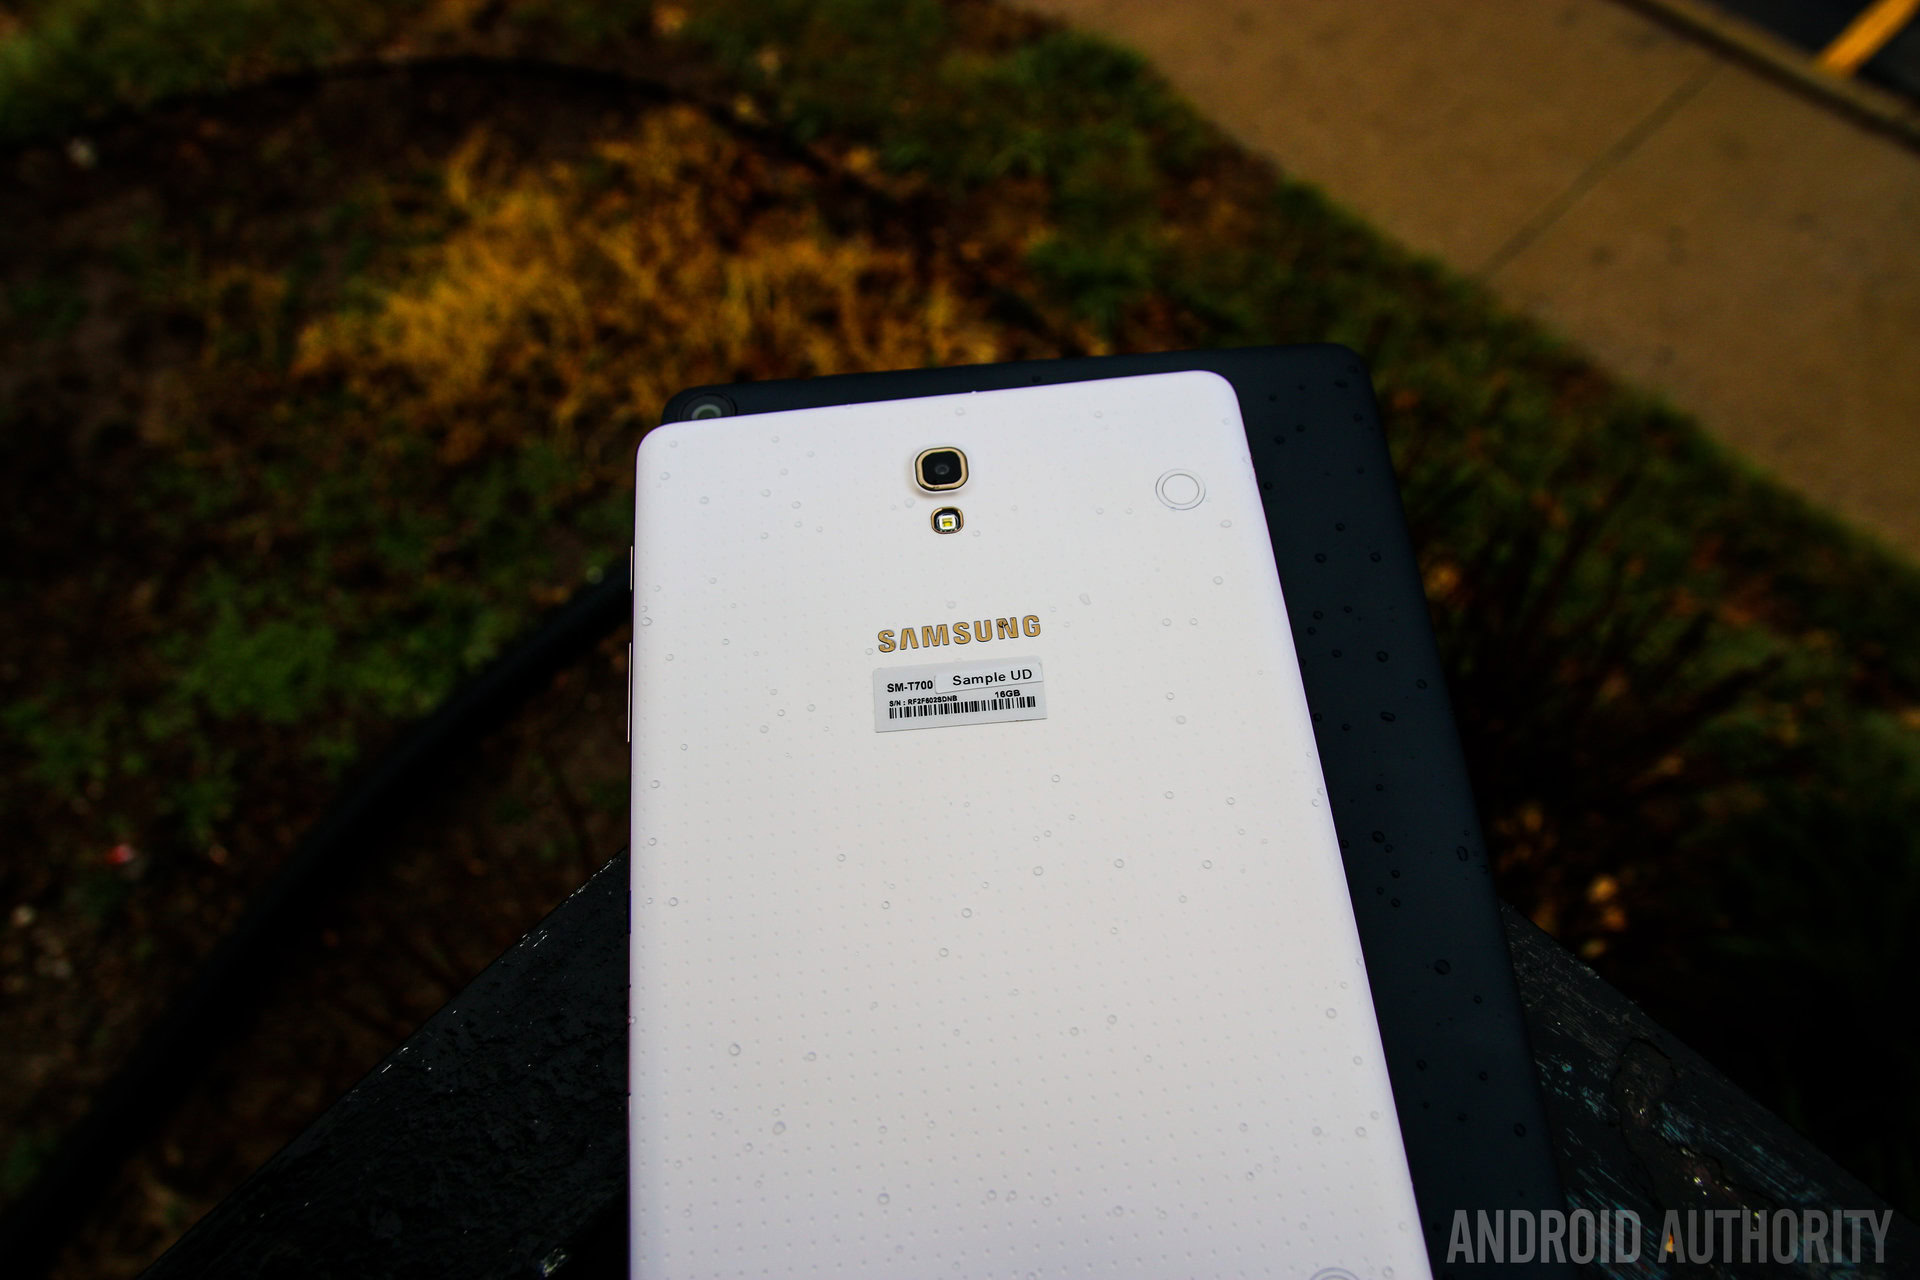 Samsung Galaxy Tab S 8.4 WiFi - T700 - Black/White (16Gb) (WIFI)